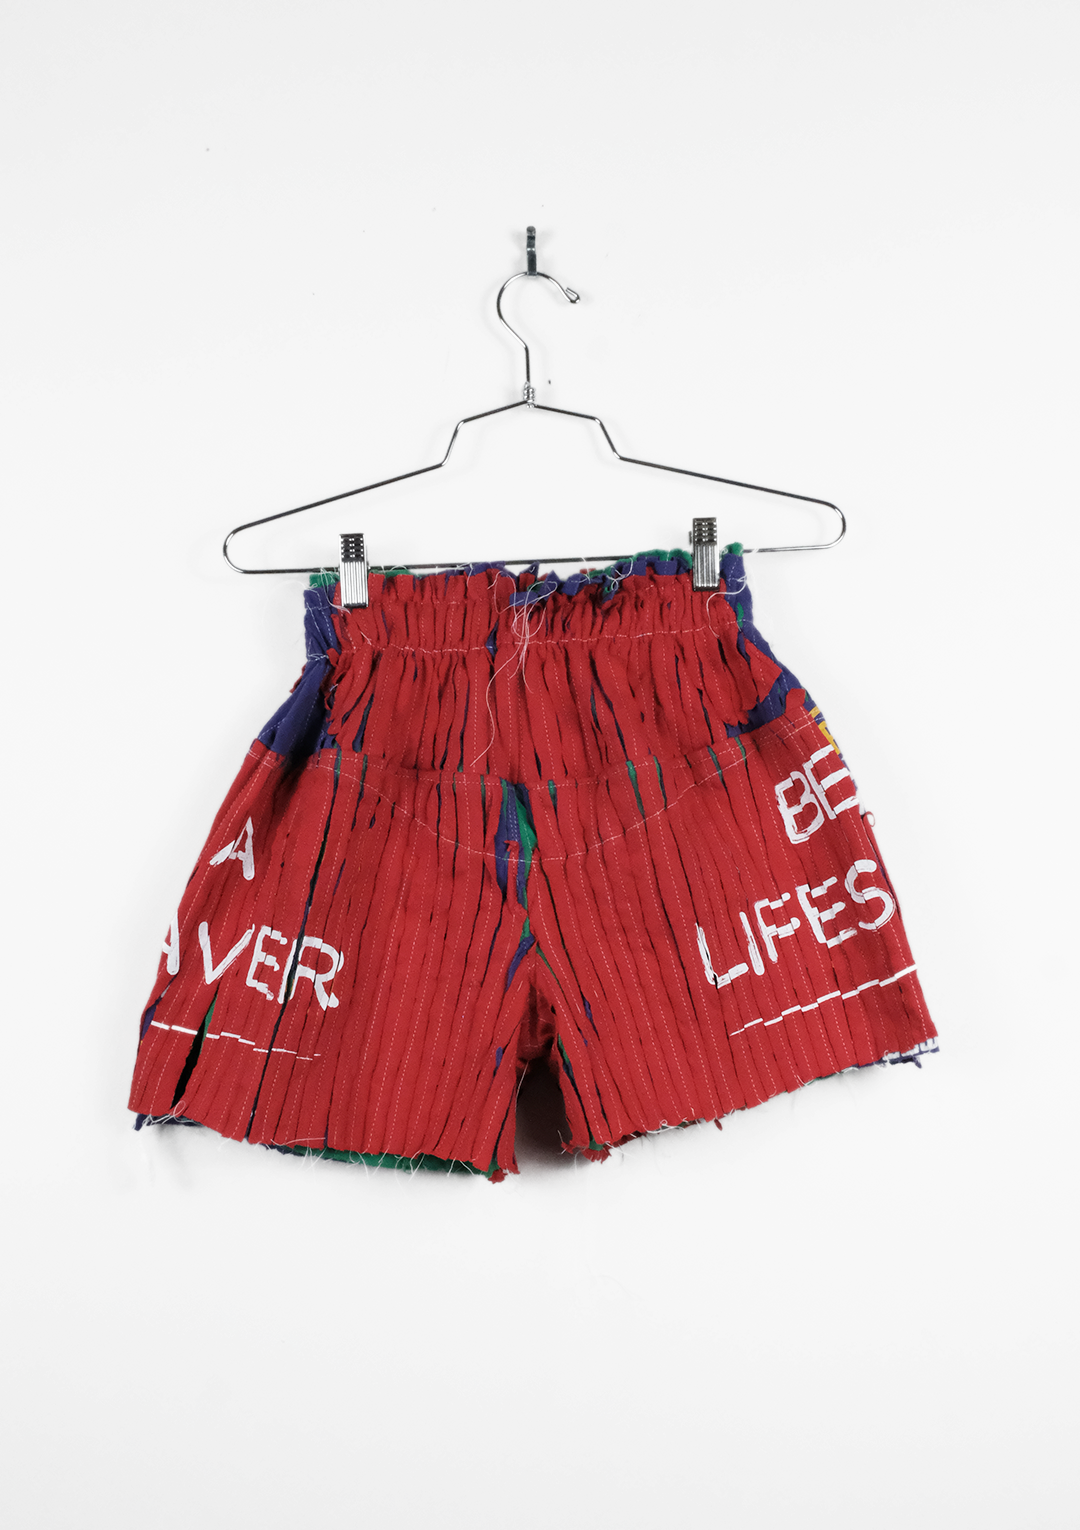 3T Short Shorts (Be a Lifesaver)